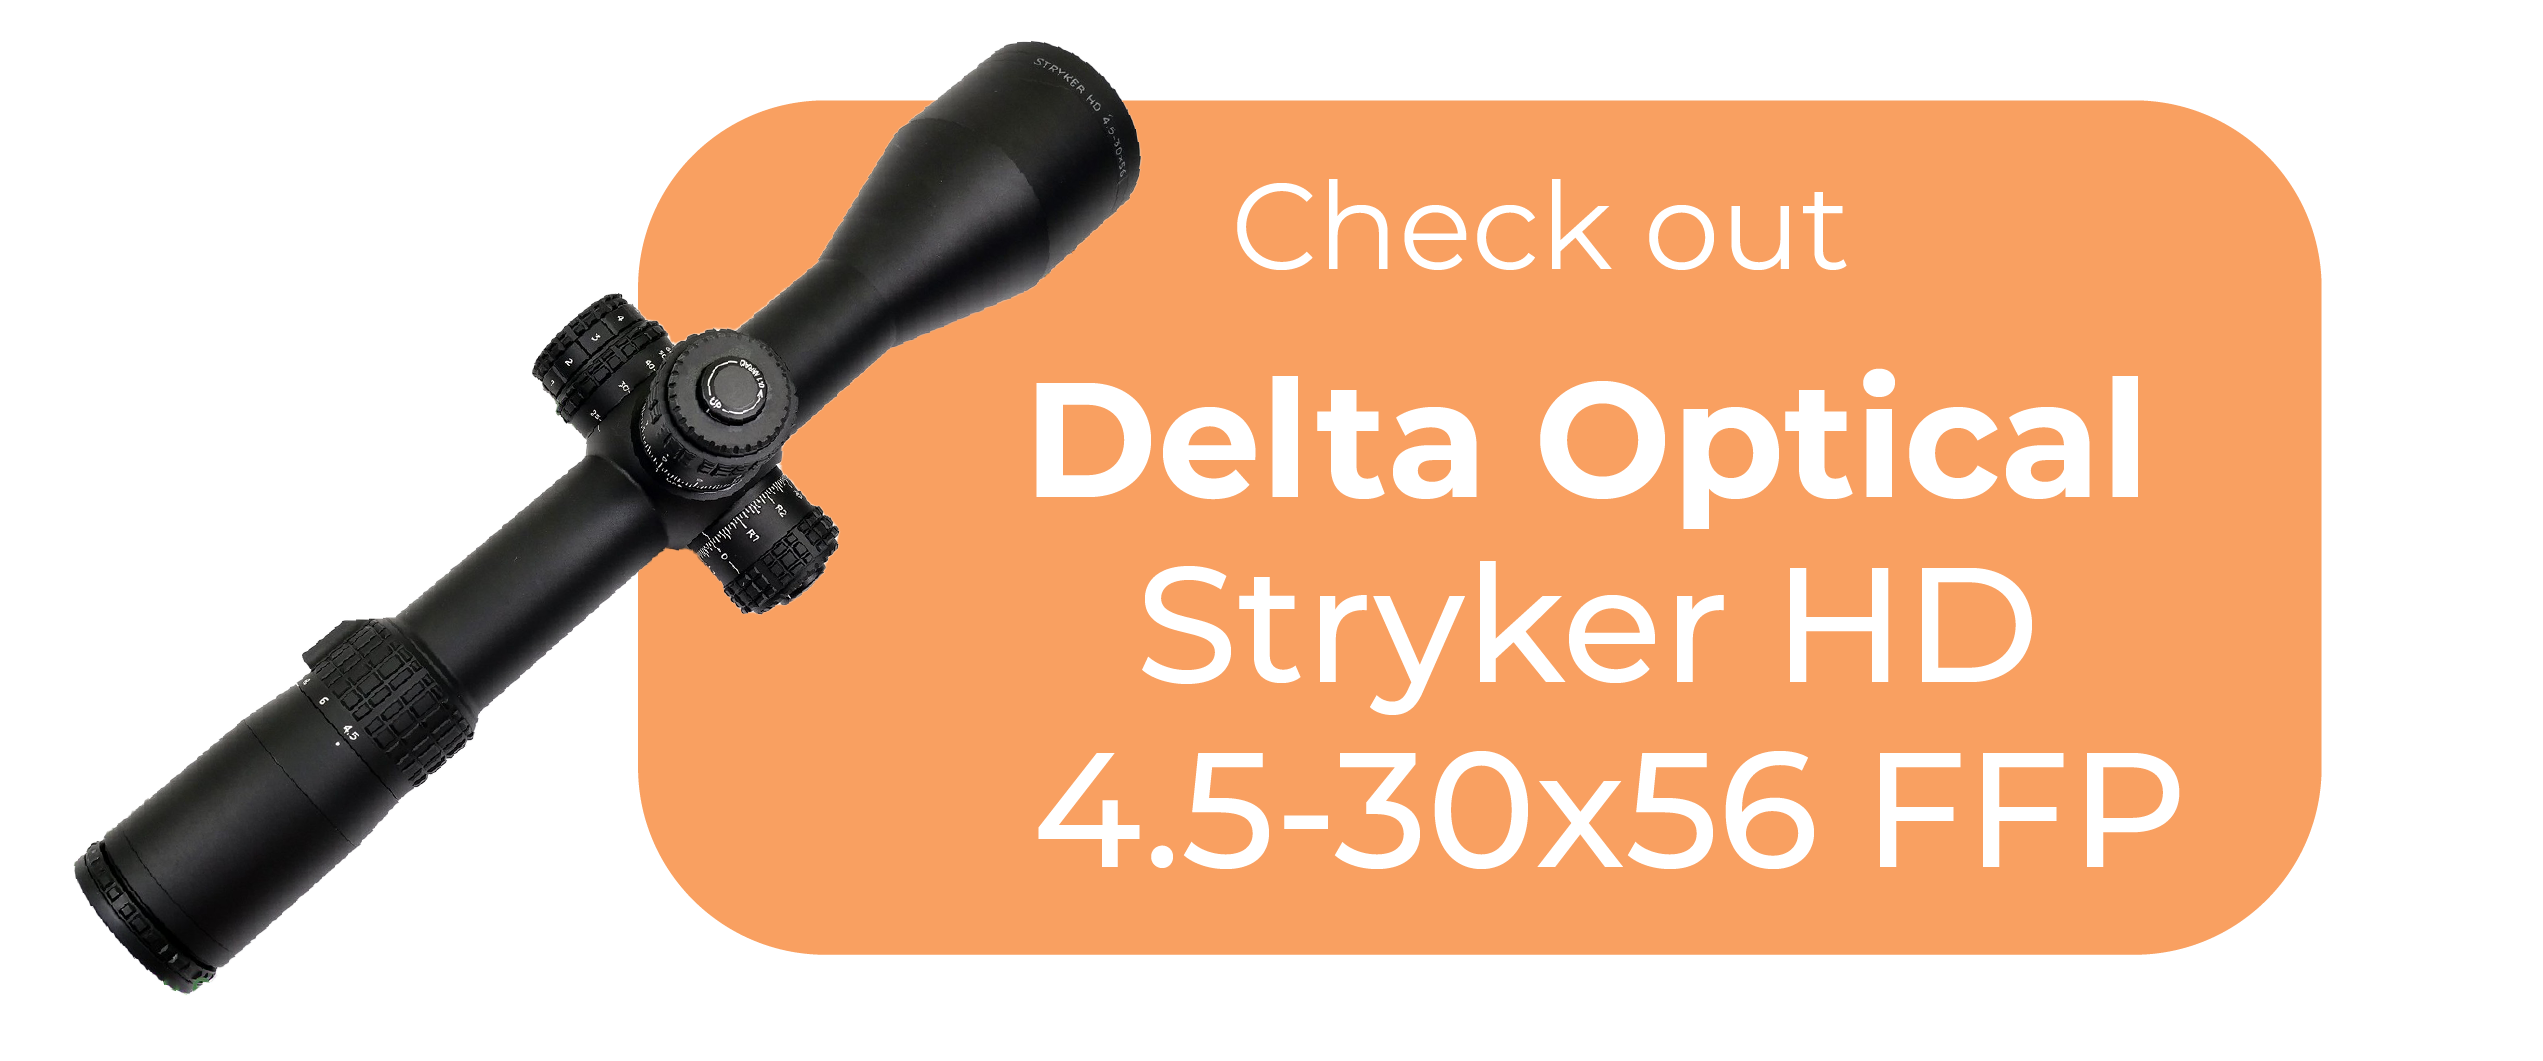 Delta Optical Stryker HD 4.5-30x56 FFP - cta